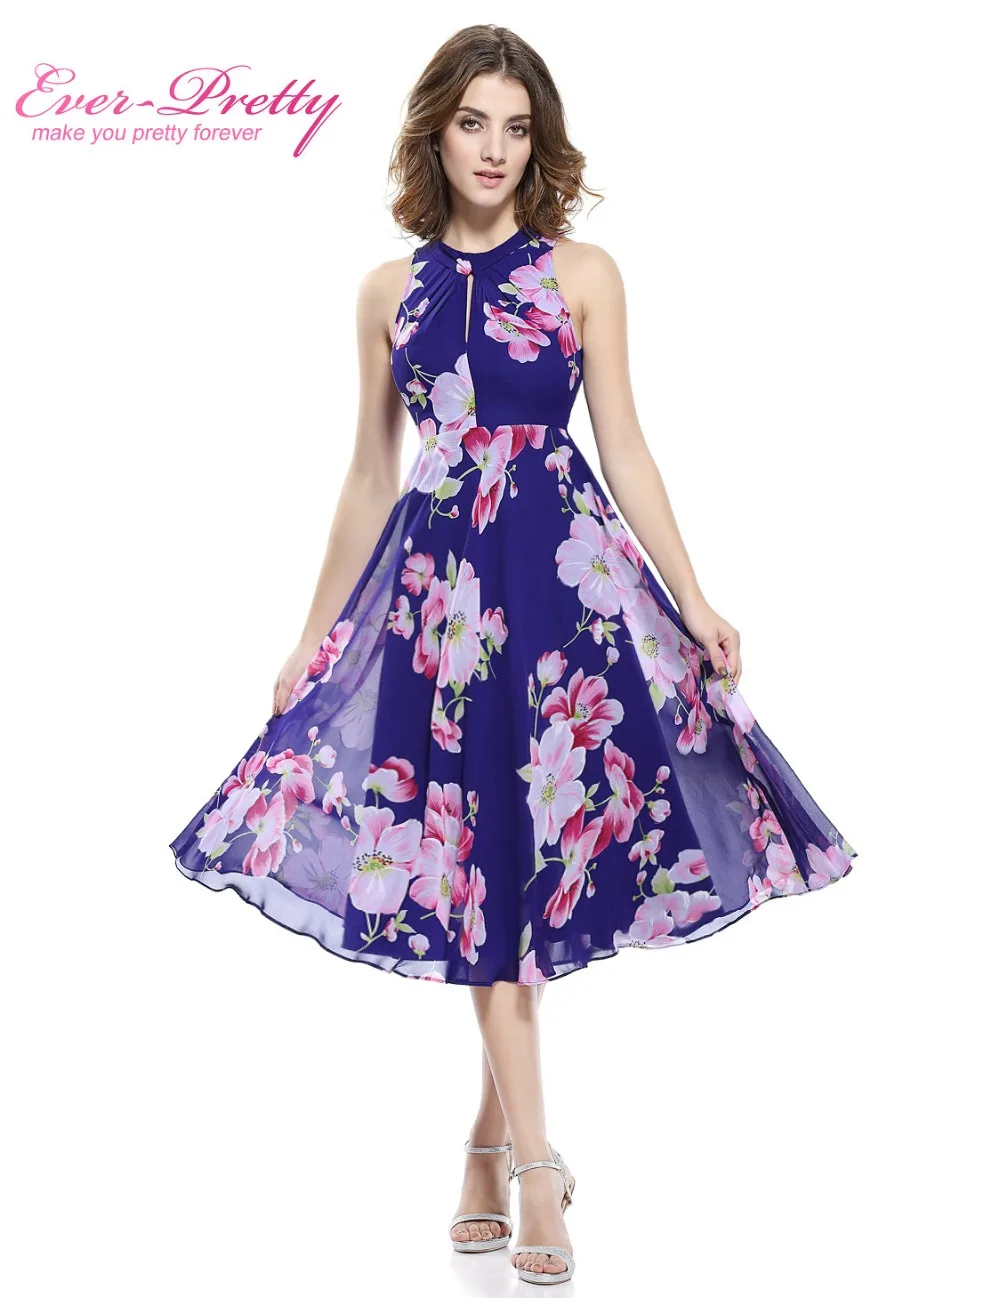 Short Cocktail Dresses Plus Size Ever Pretty 05452 2018 Summer Flower Floral Print Dress Formal